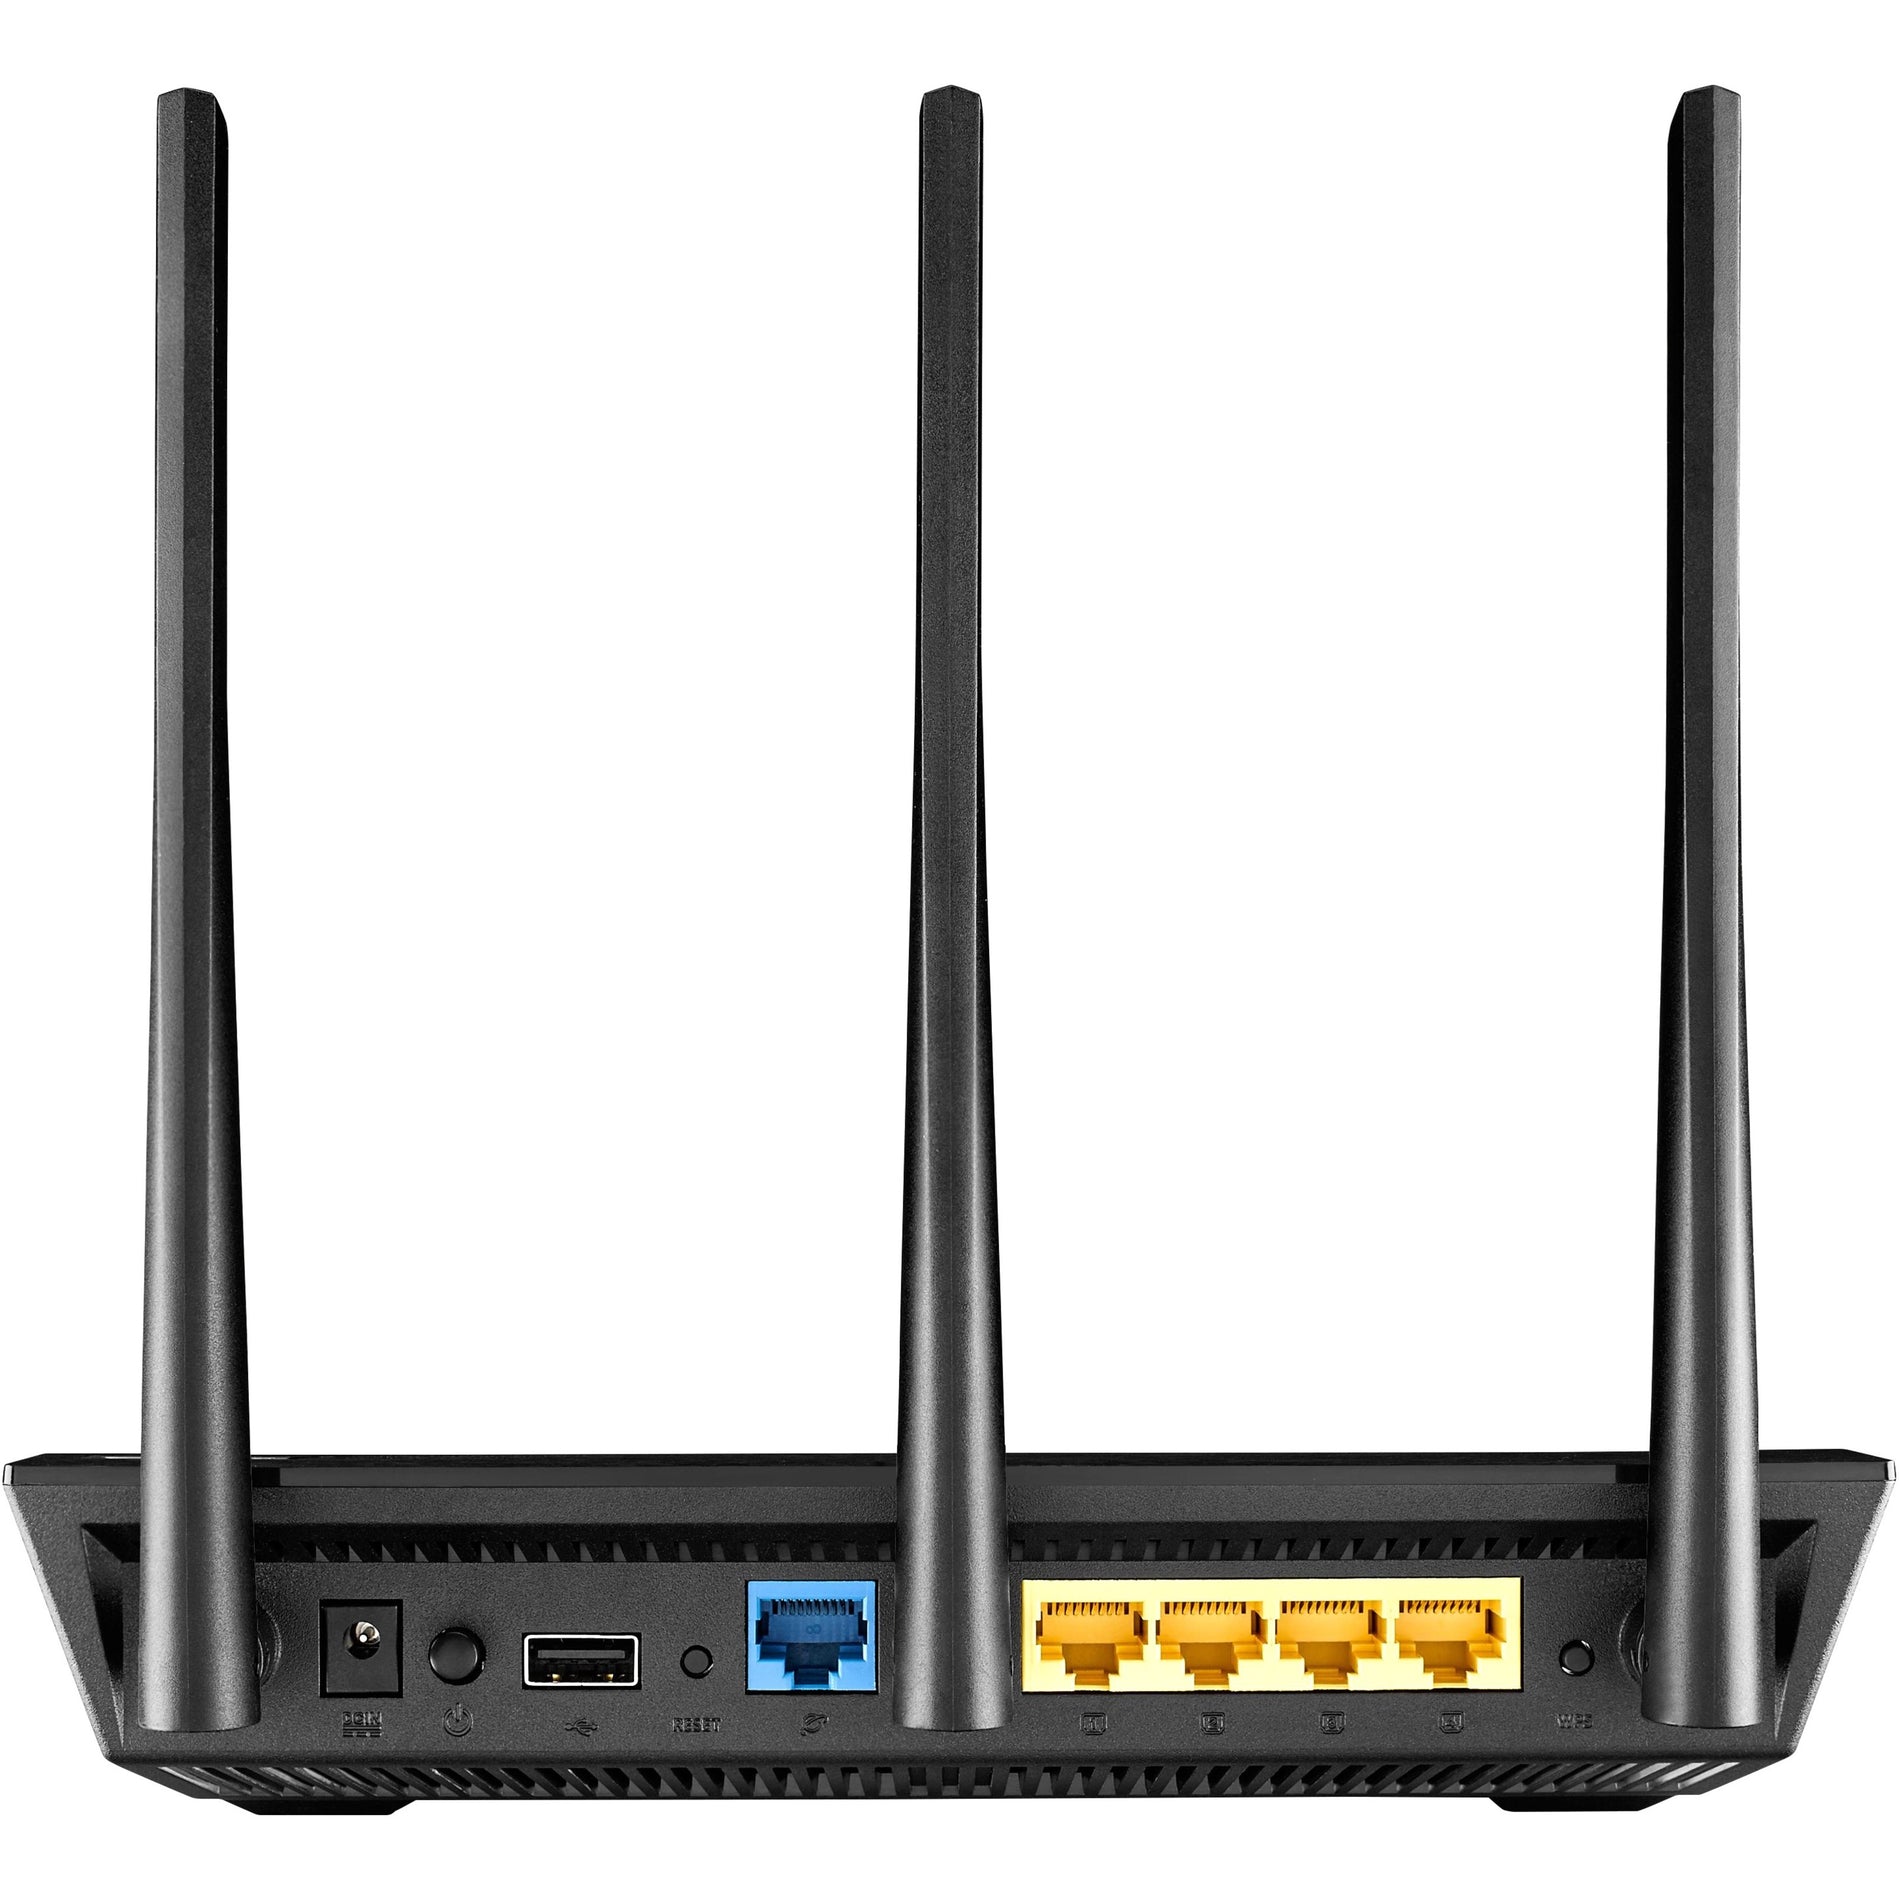 Asus RT-AC66U B1 Dual-band Wireless-AC1750 Gigabit Router, Wi-Fi 5, 218.75 MB/s